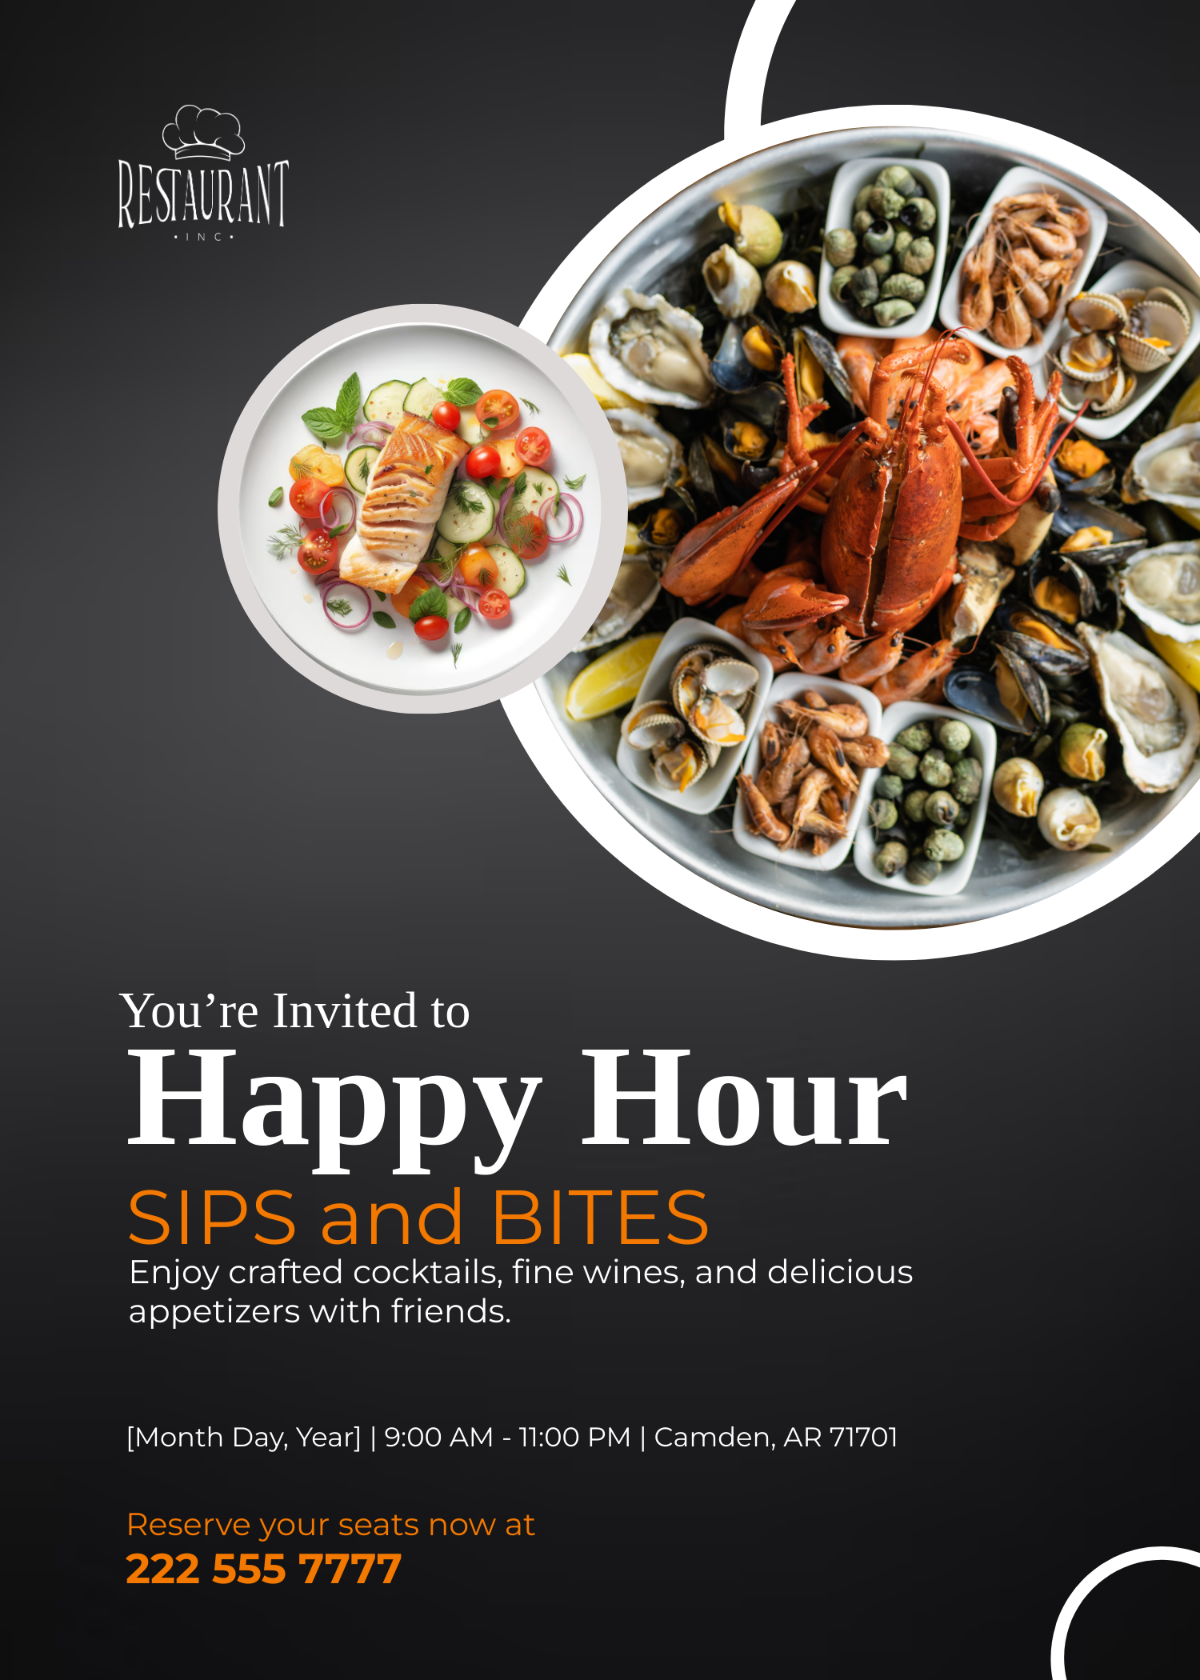 Restaurant Happy Hour Event Invitation